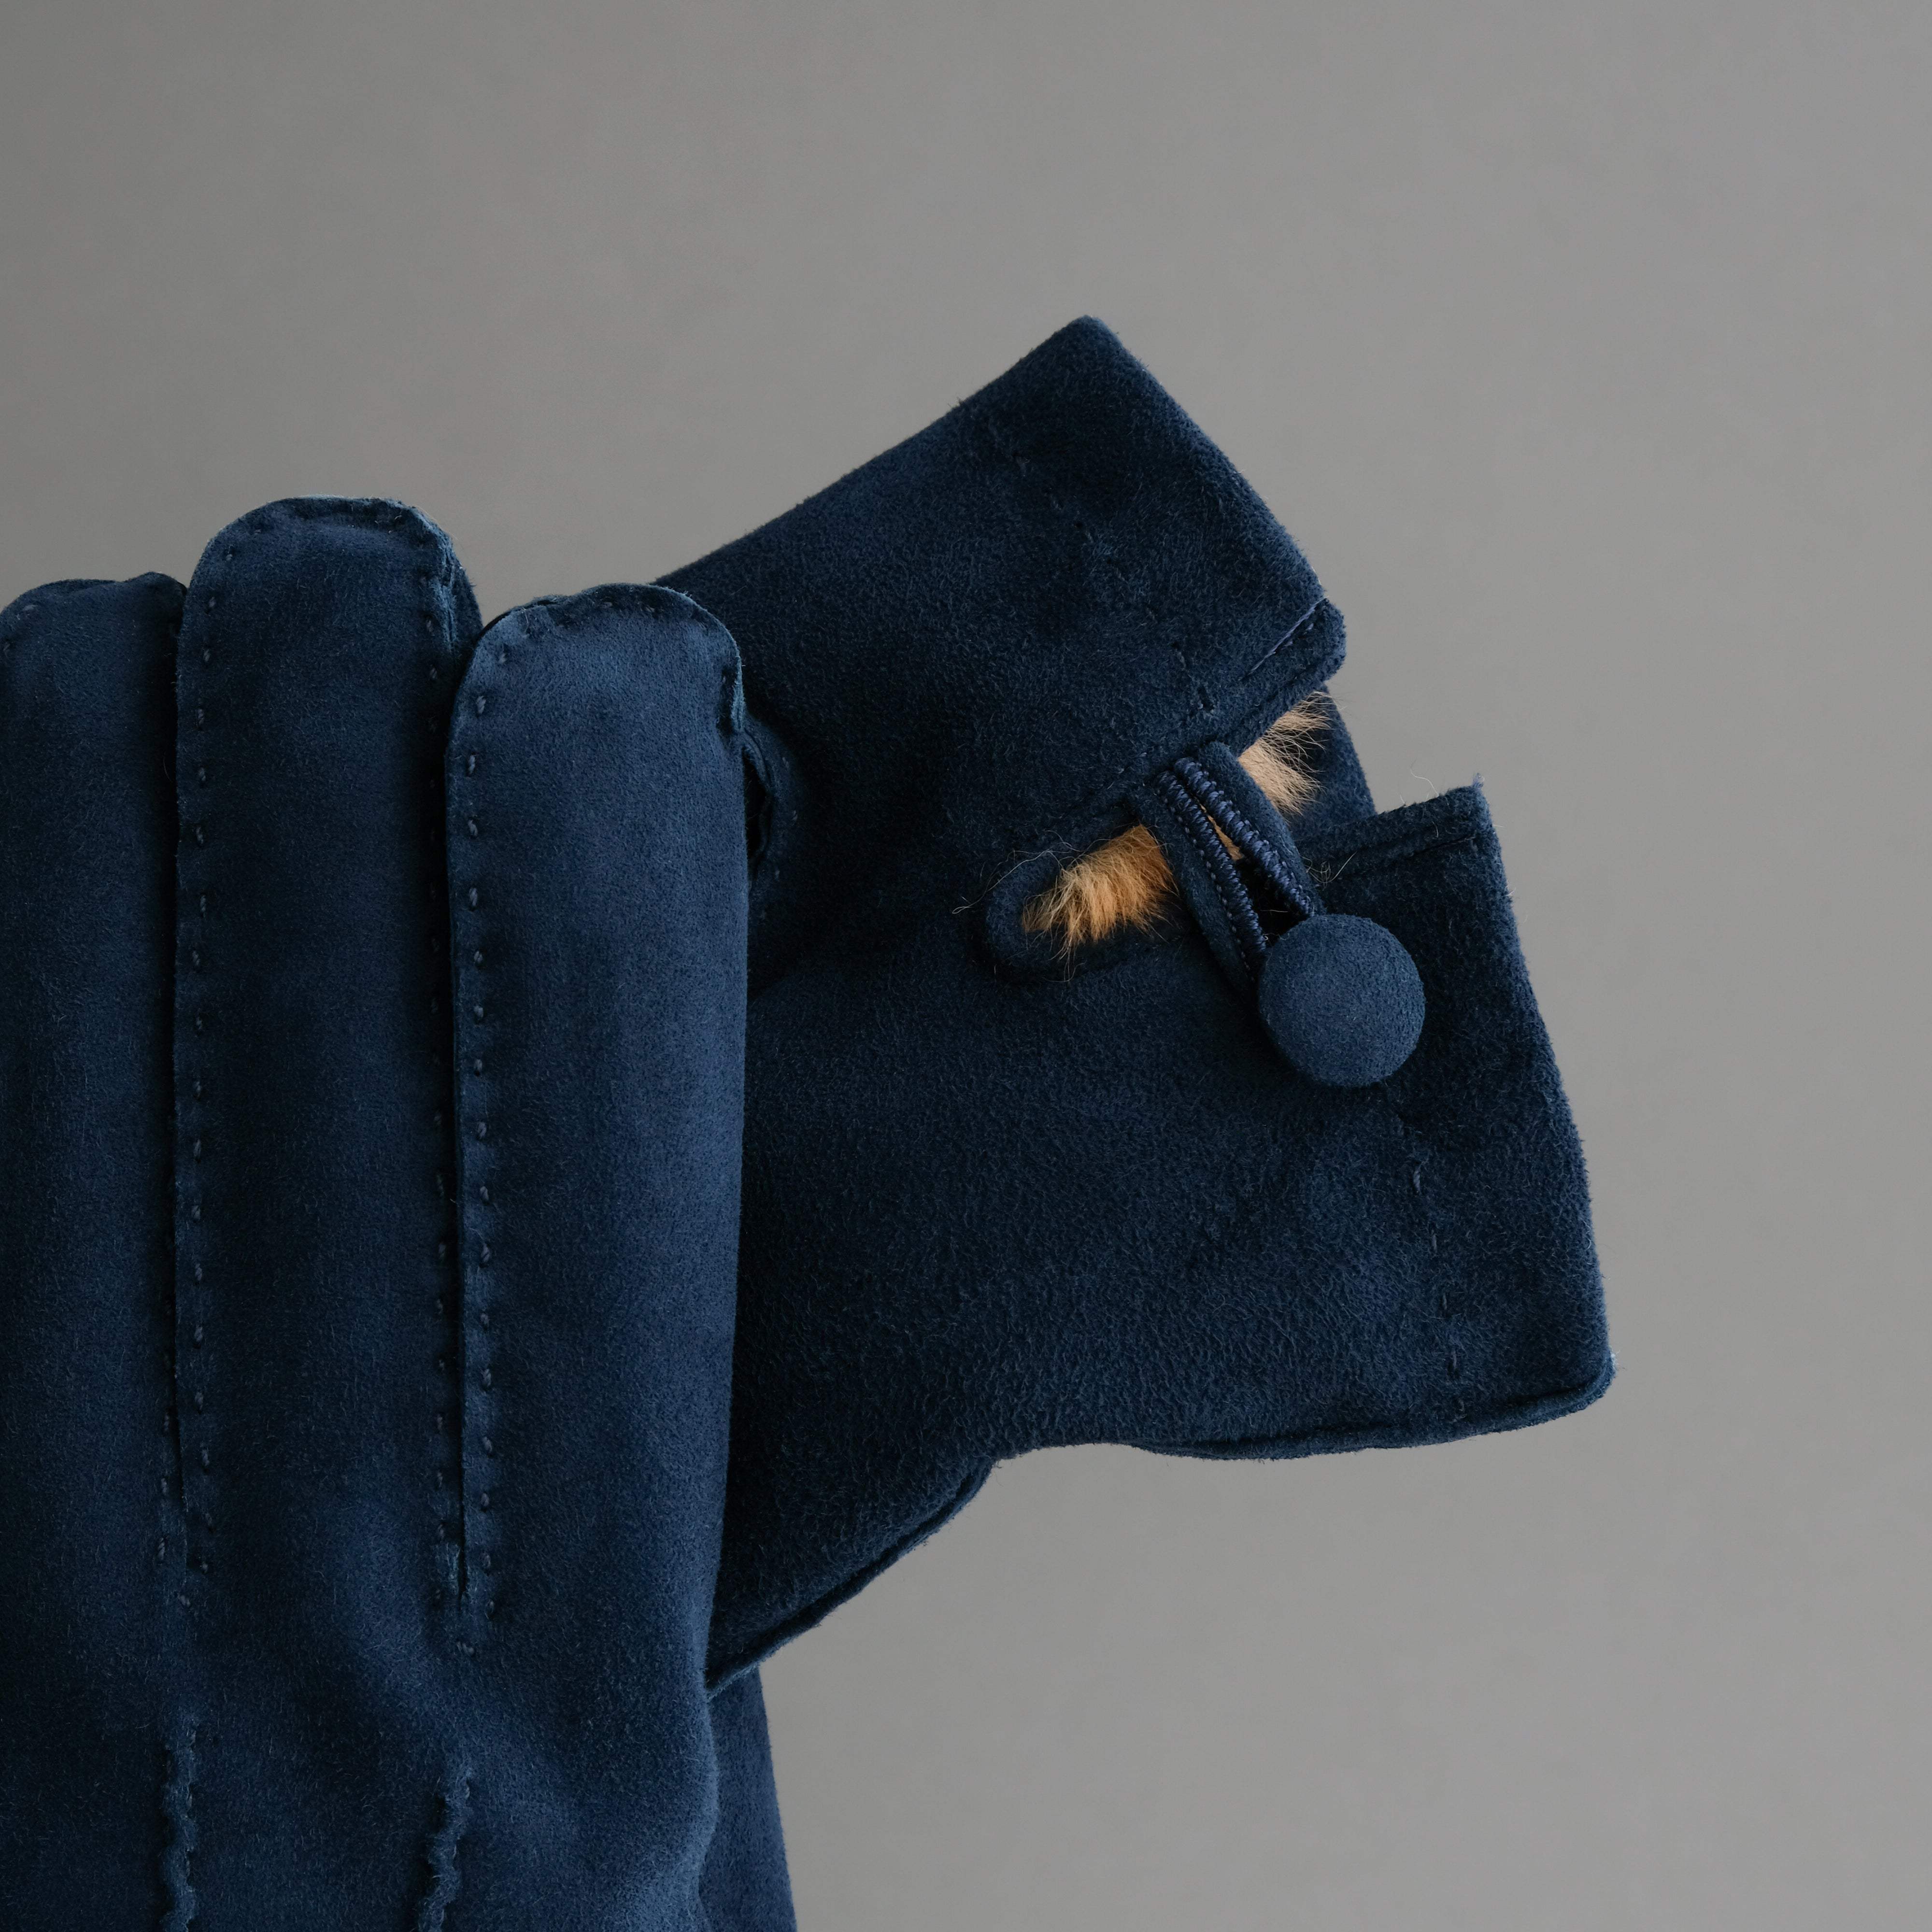 Gentlemen&#39;s Buttoned Gloves from Dark Blue Reindeer Suede Lined with Orylag Fur - TR Handschuhe Wien - Thomas Riemer Handmade Gloves